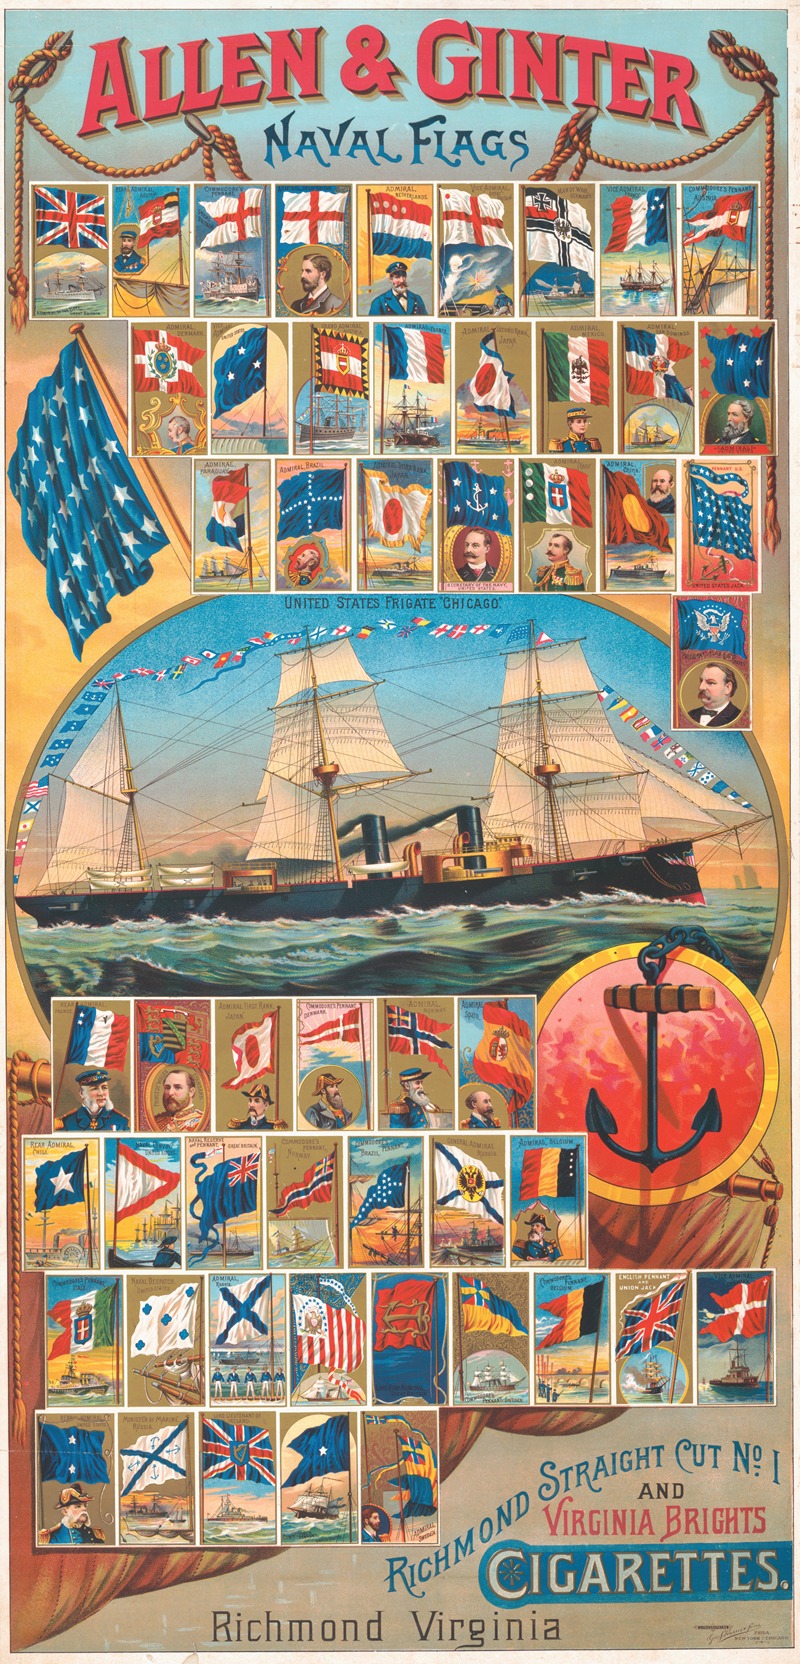 Geo. S. Harris & Sons - Allen & Ginter, naval flags, Richmond straight cut no. 1 and Virginia brights cigarettes